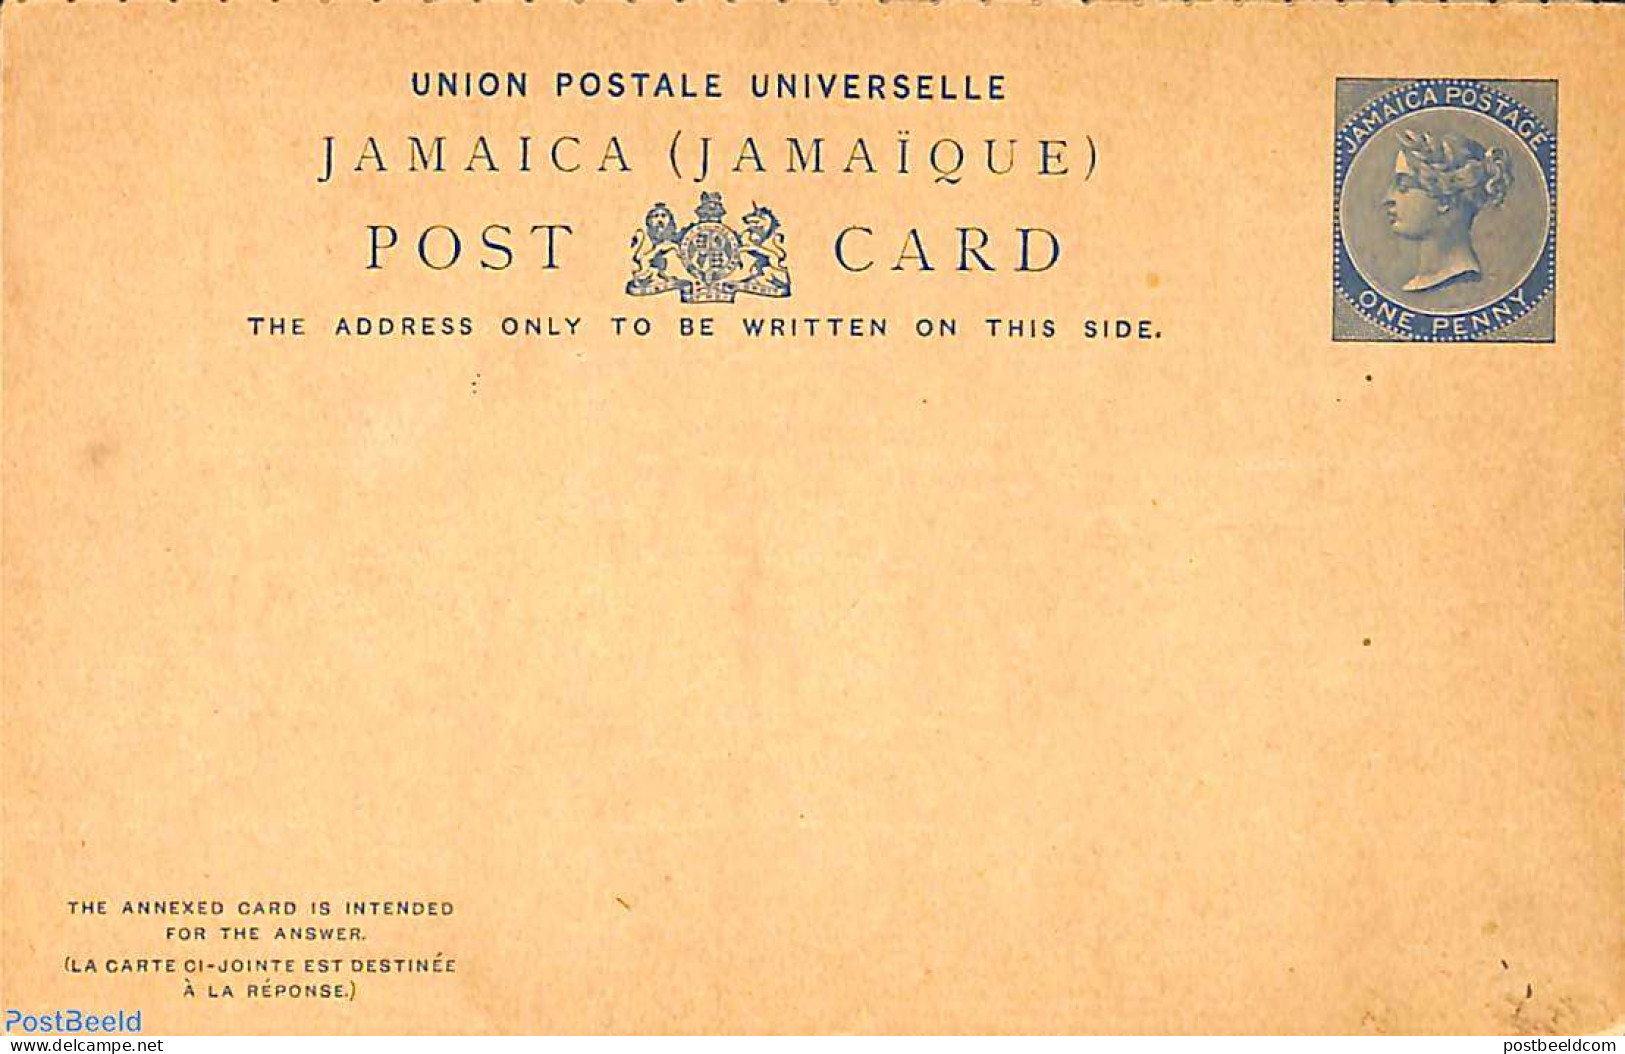 Jamaica 1891 Reply Paid Postcard 1/1d, Unused Postal Stationary - Jamaica (1962-...)